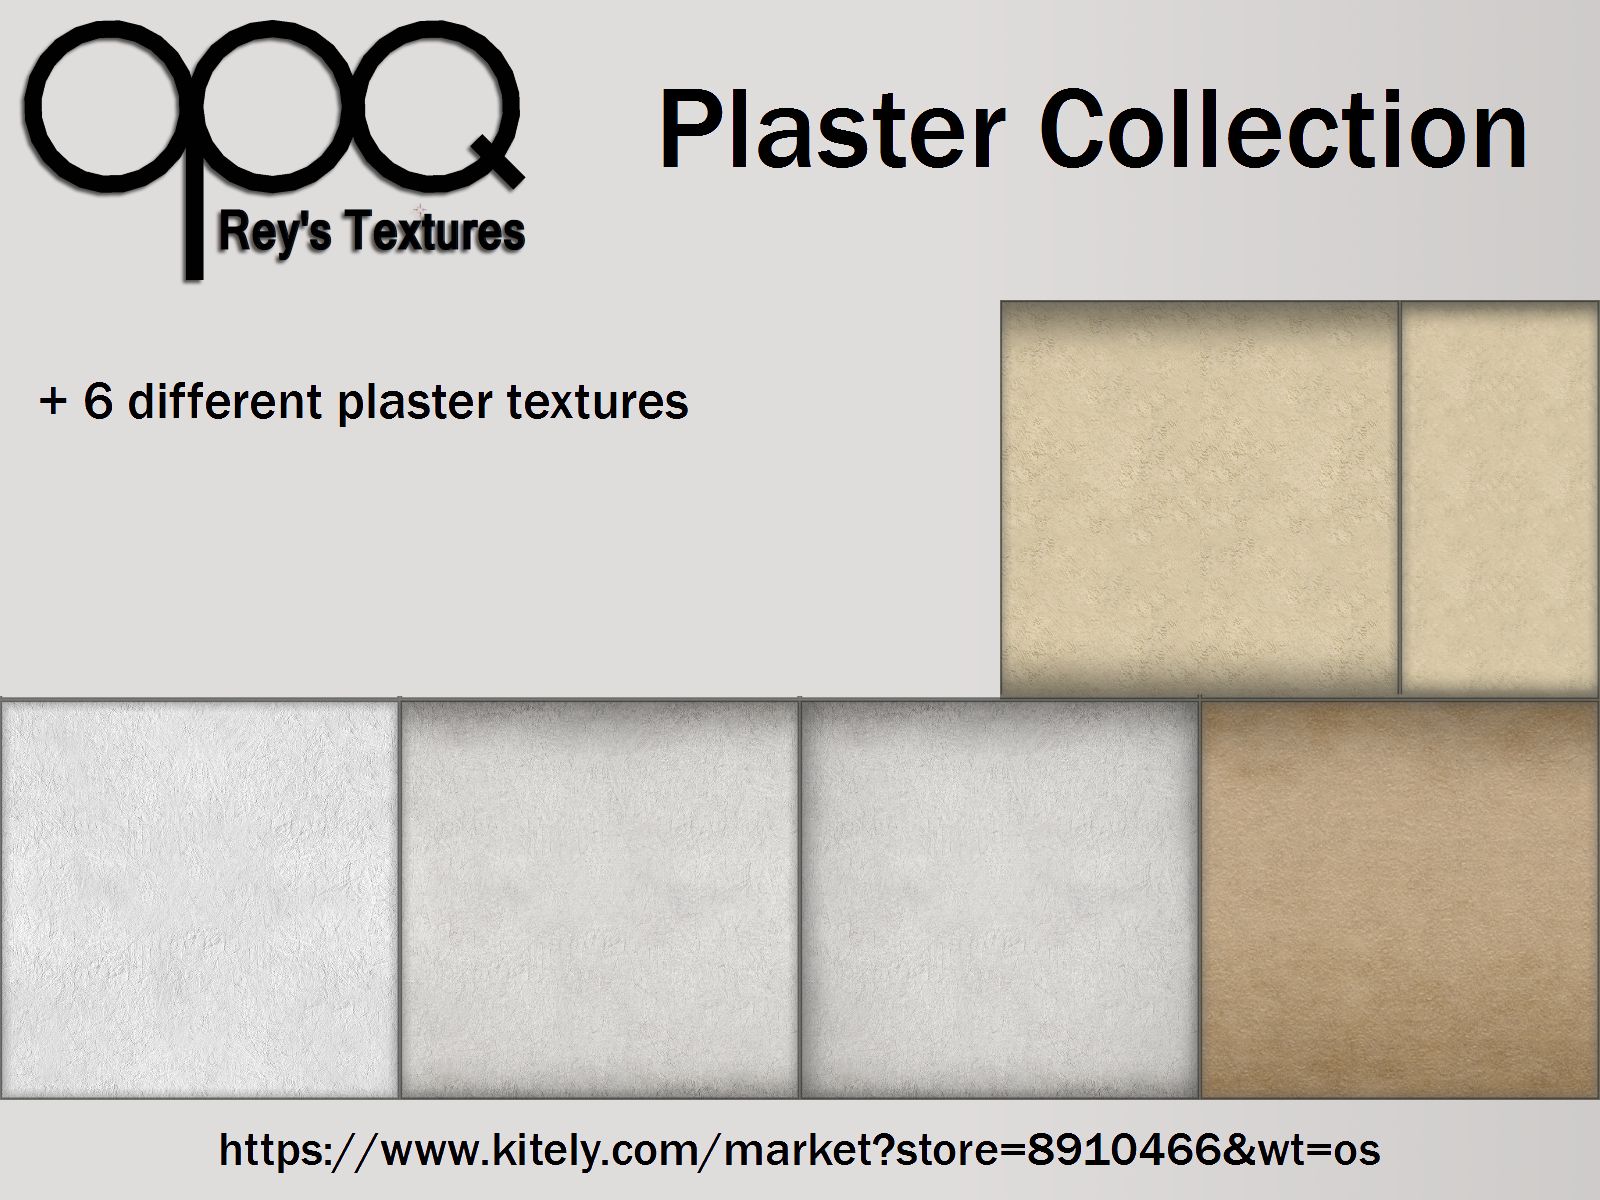 Rey's Plaster Collection Poster Kitely.jpg